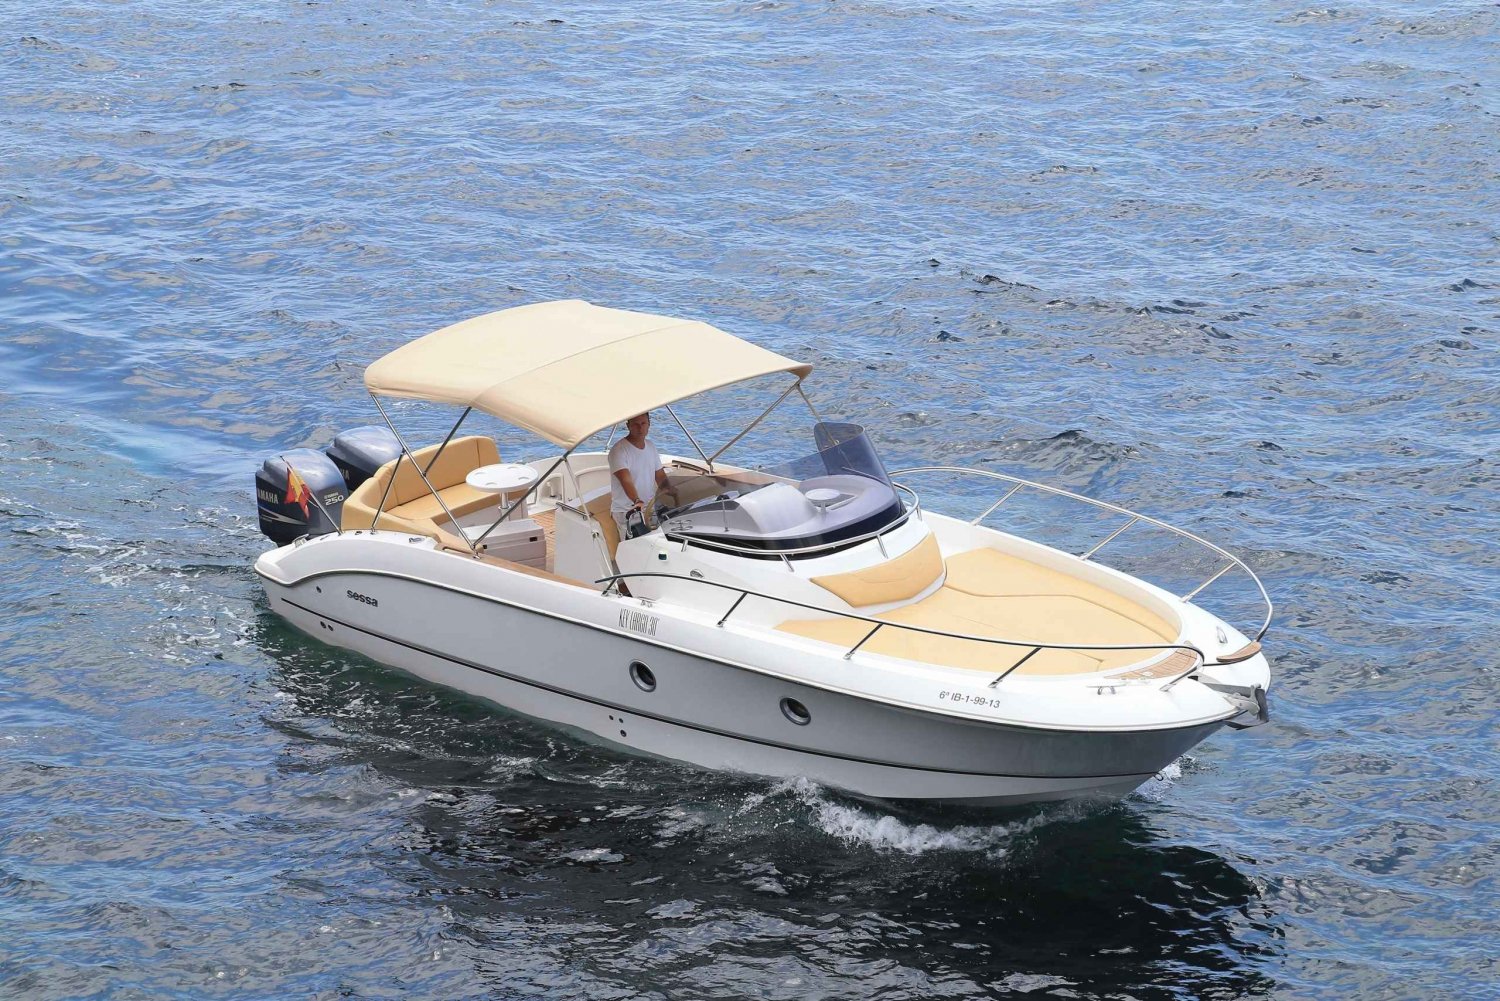 Ibiza: 9-persoons privé boot huren, Formentera & kohokohtia